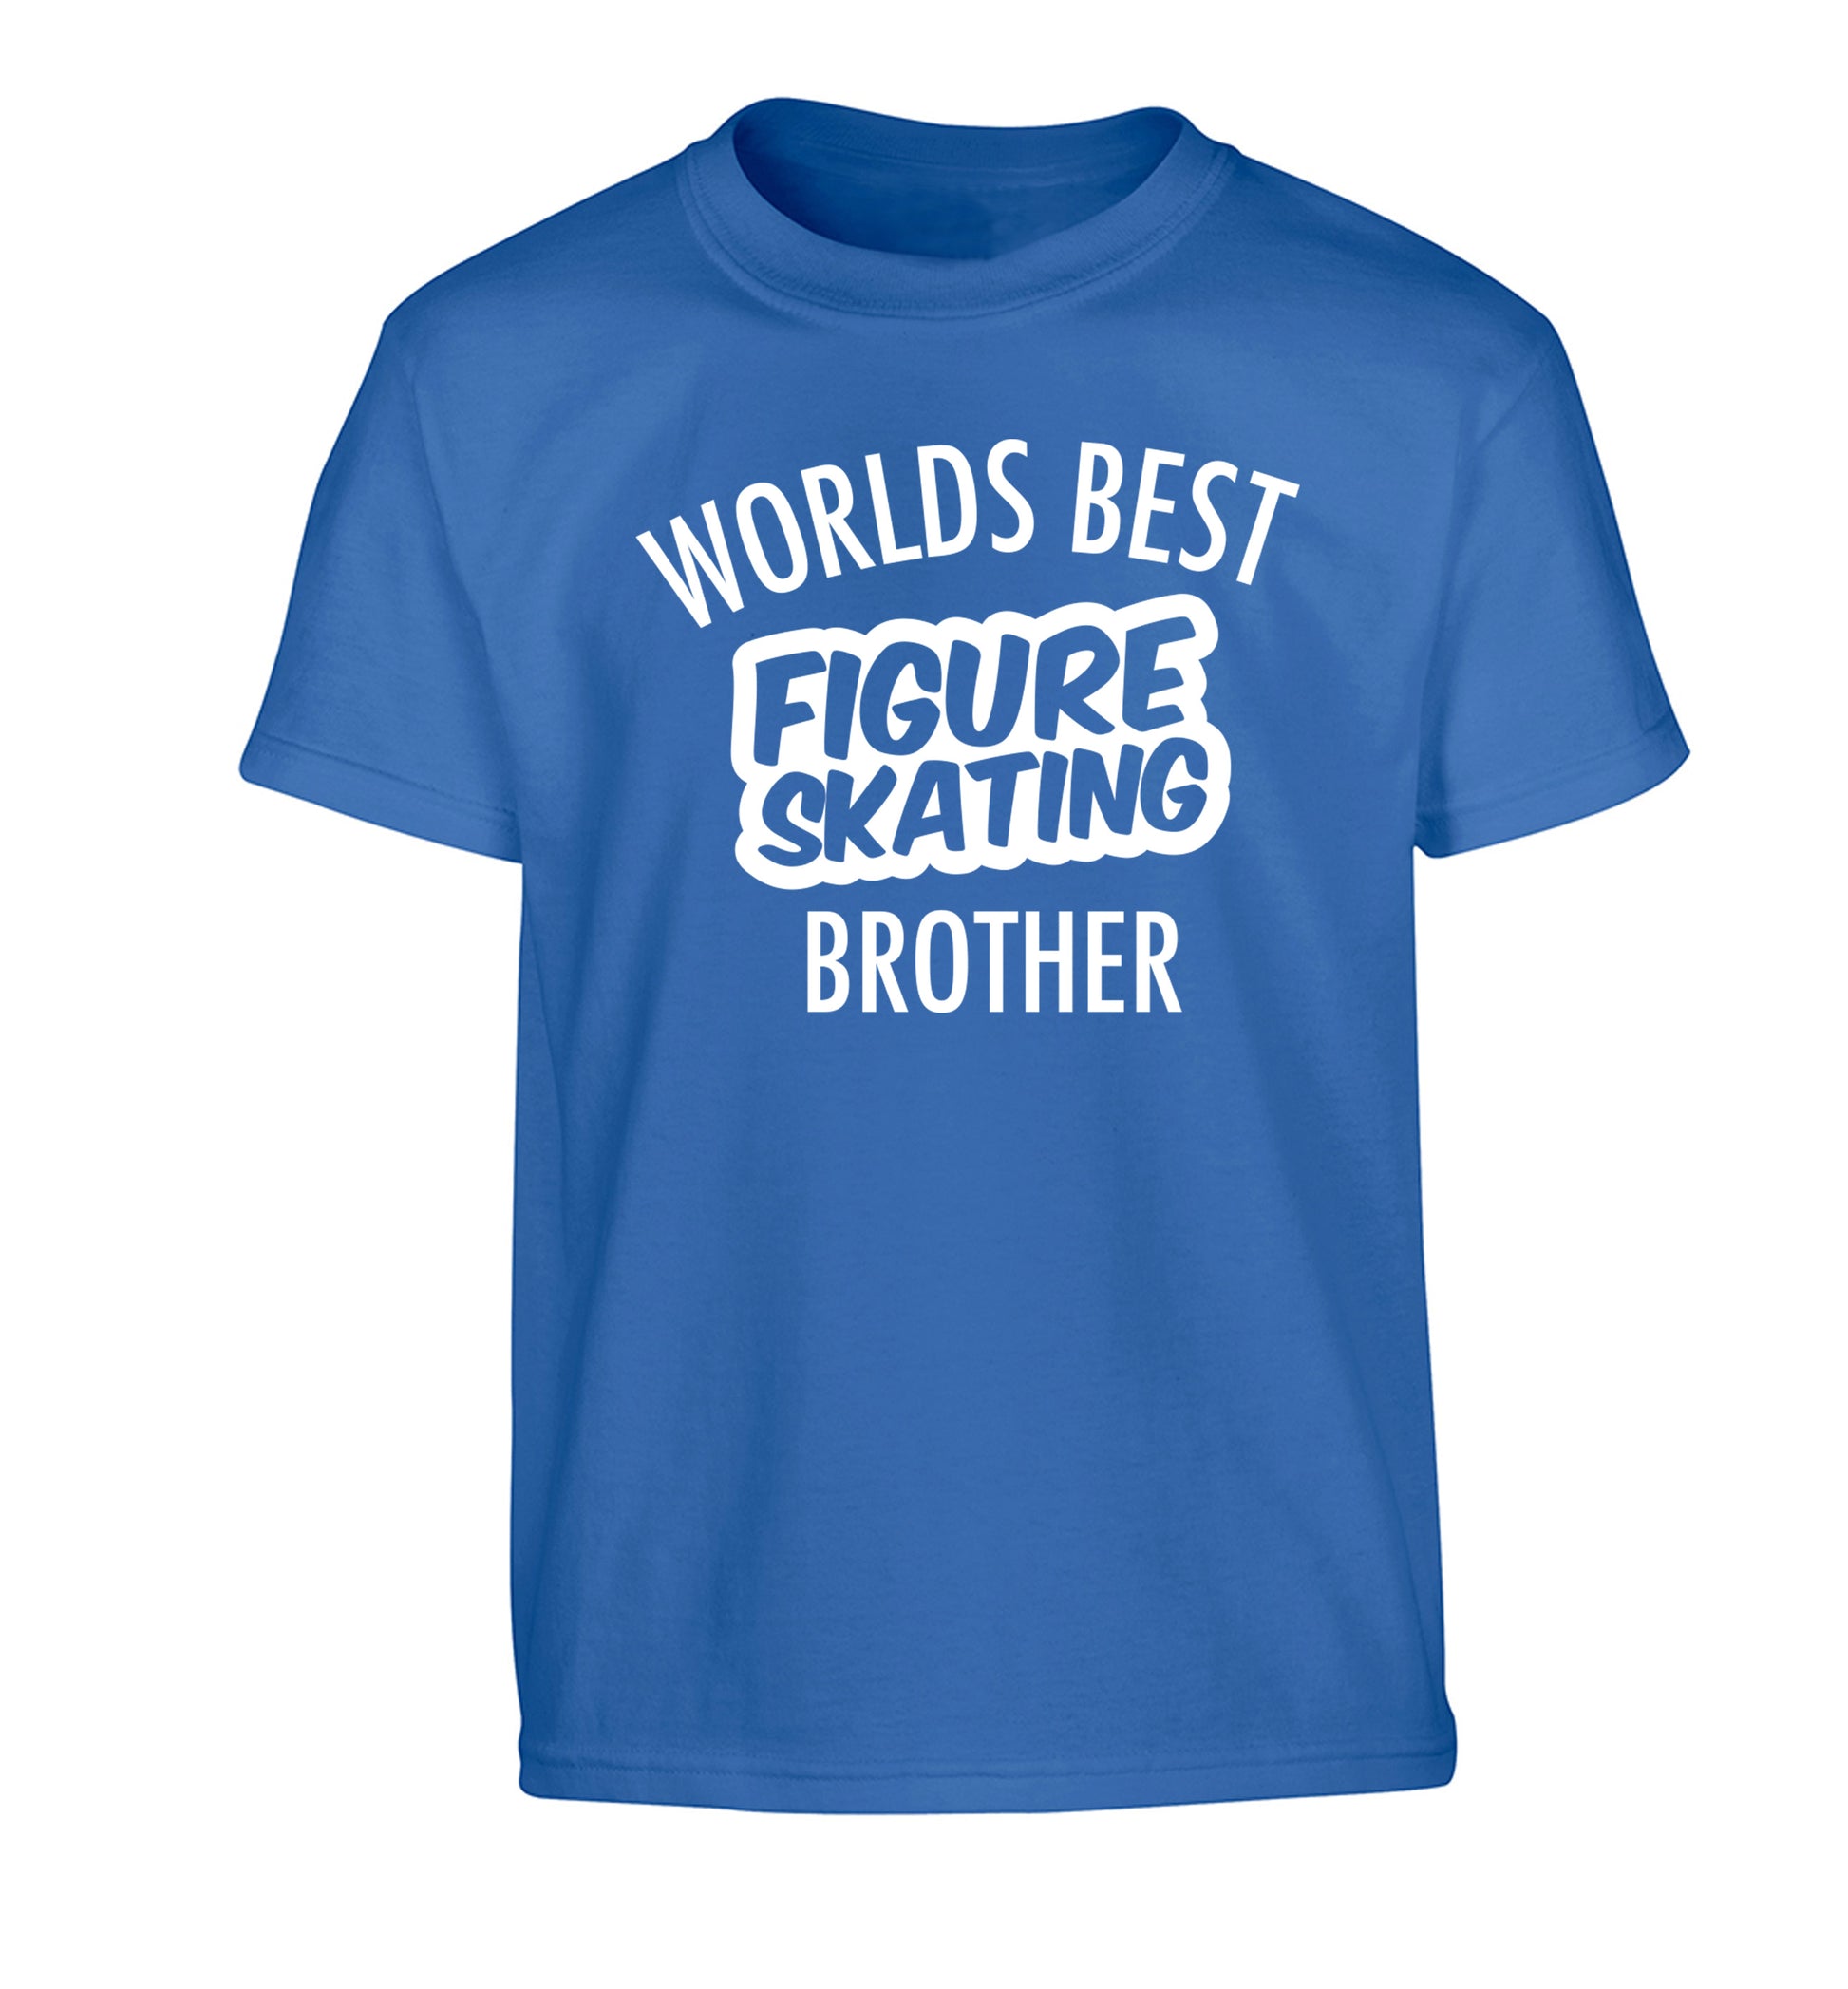 Worlds best figure skating brother Children's blue Tshirt 12-14 Years